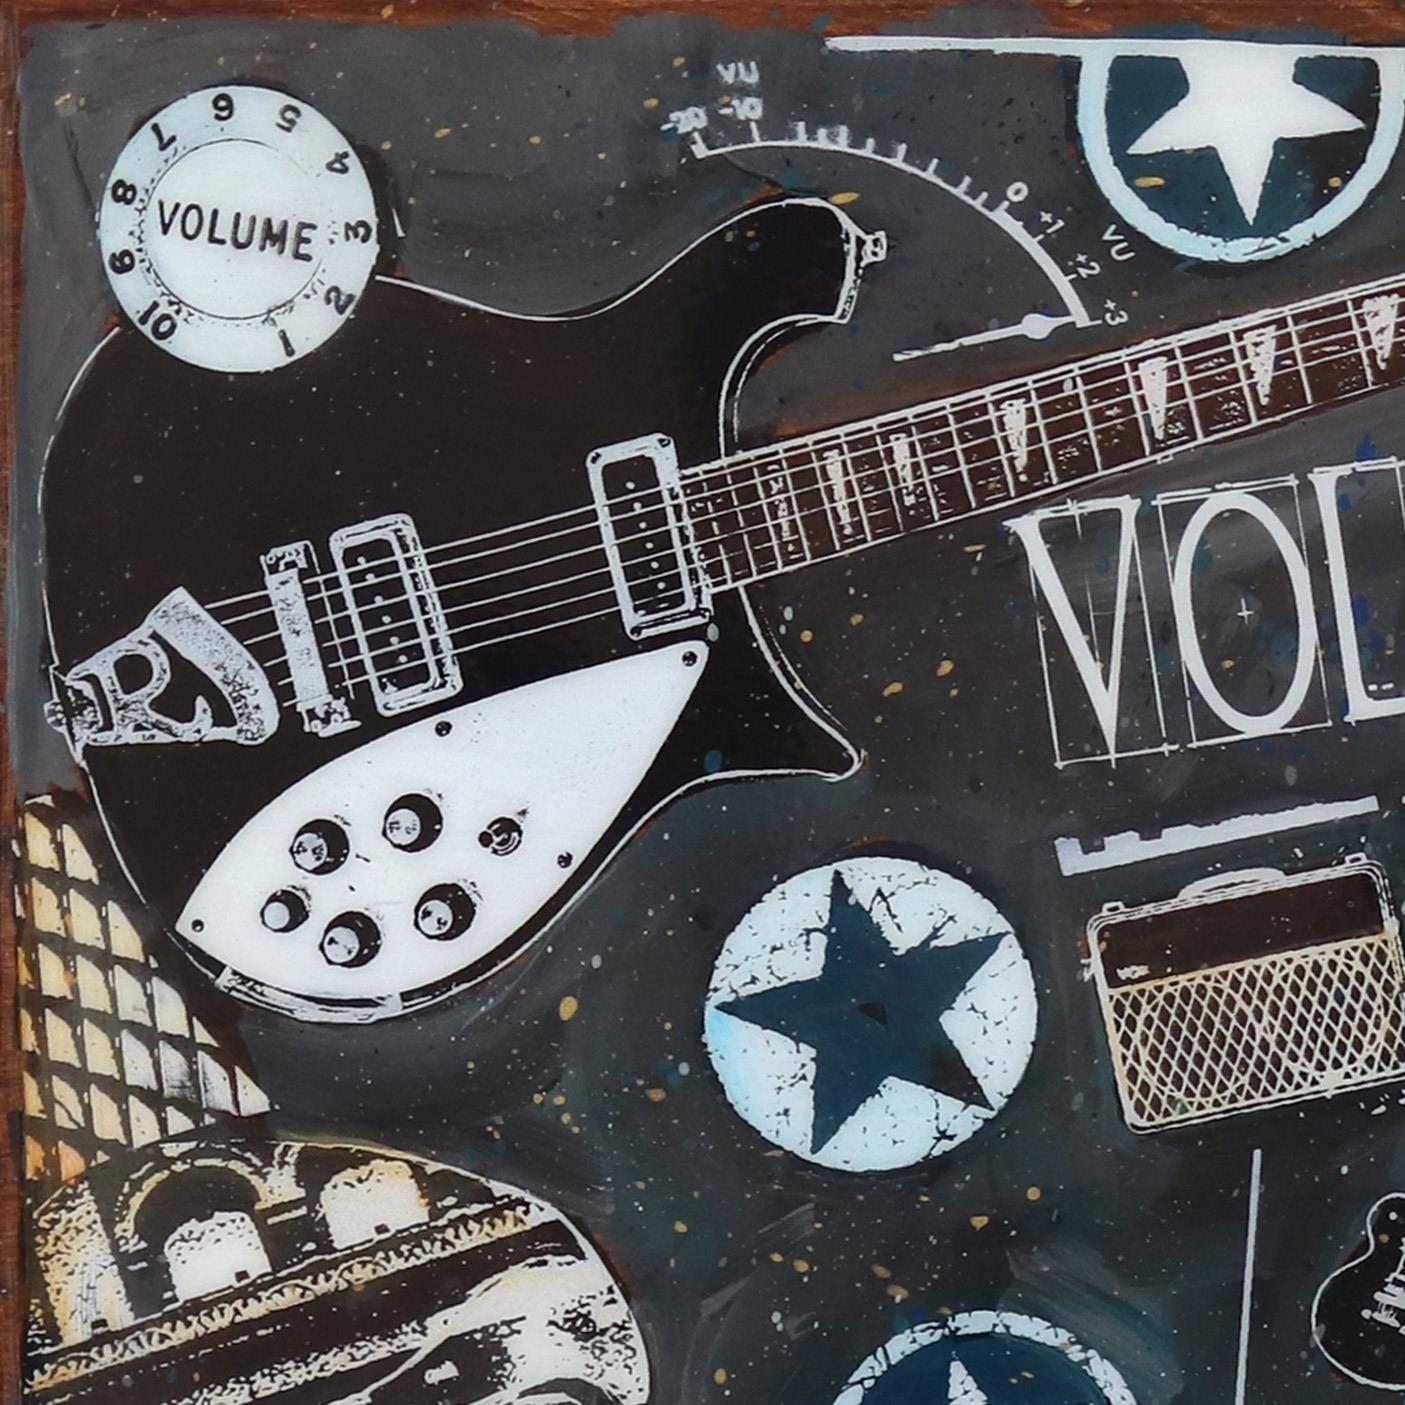 Volume! - Original Artwork Music Instruments Guitar Keyboard Amplifier Painting - Pop Art Mixed Media Art by Carl Smith